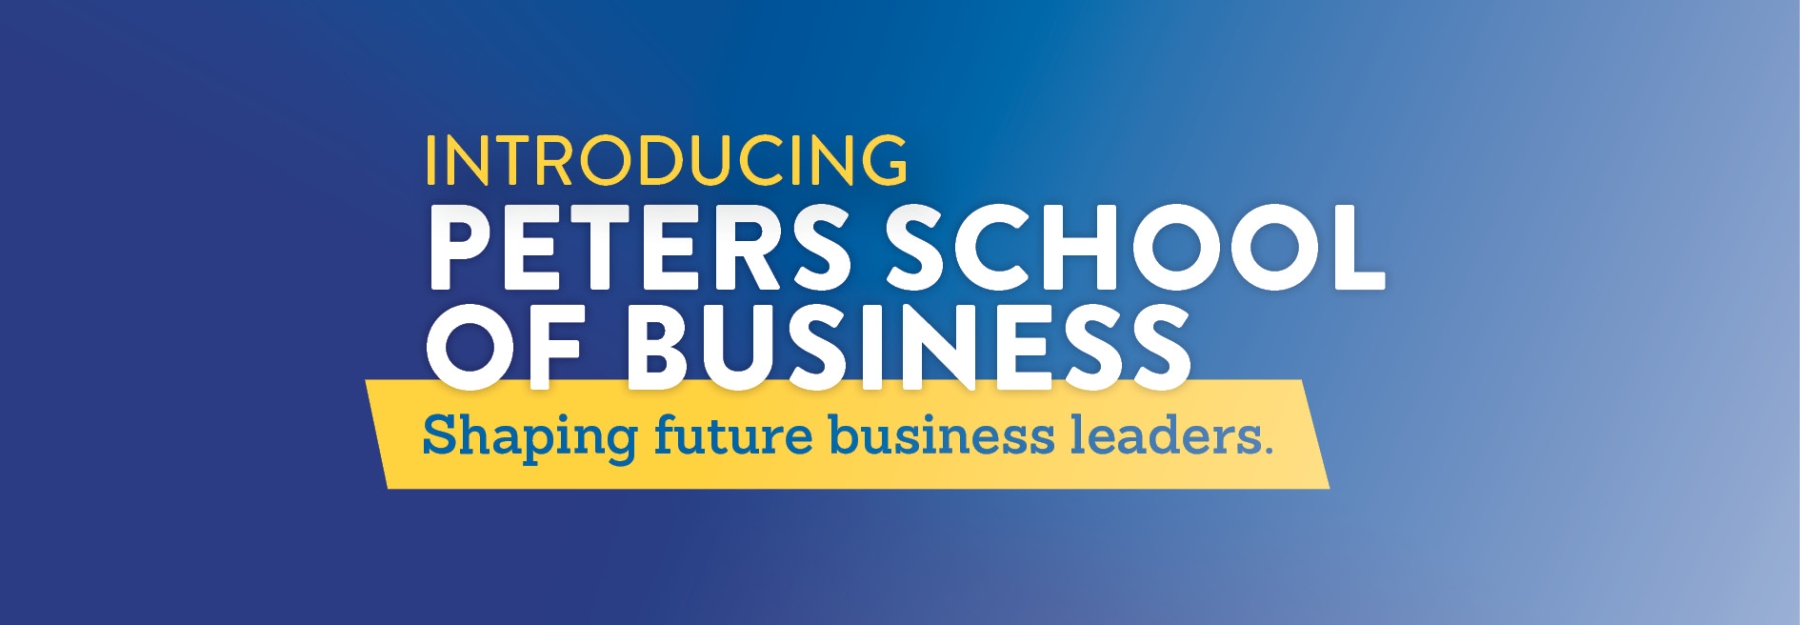 Peters School of Business